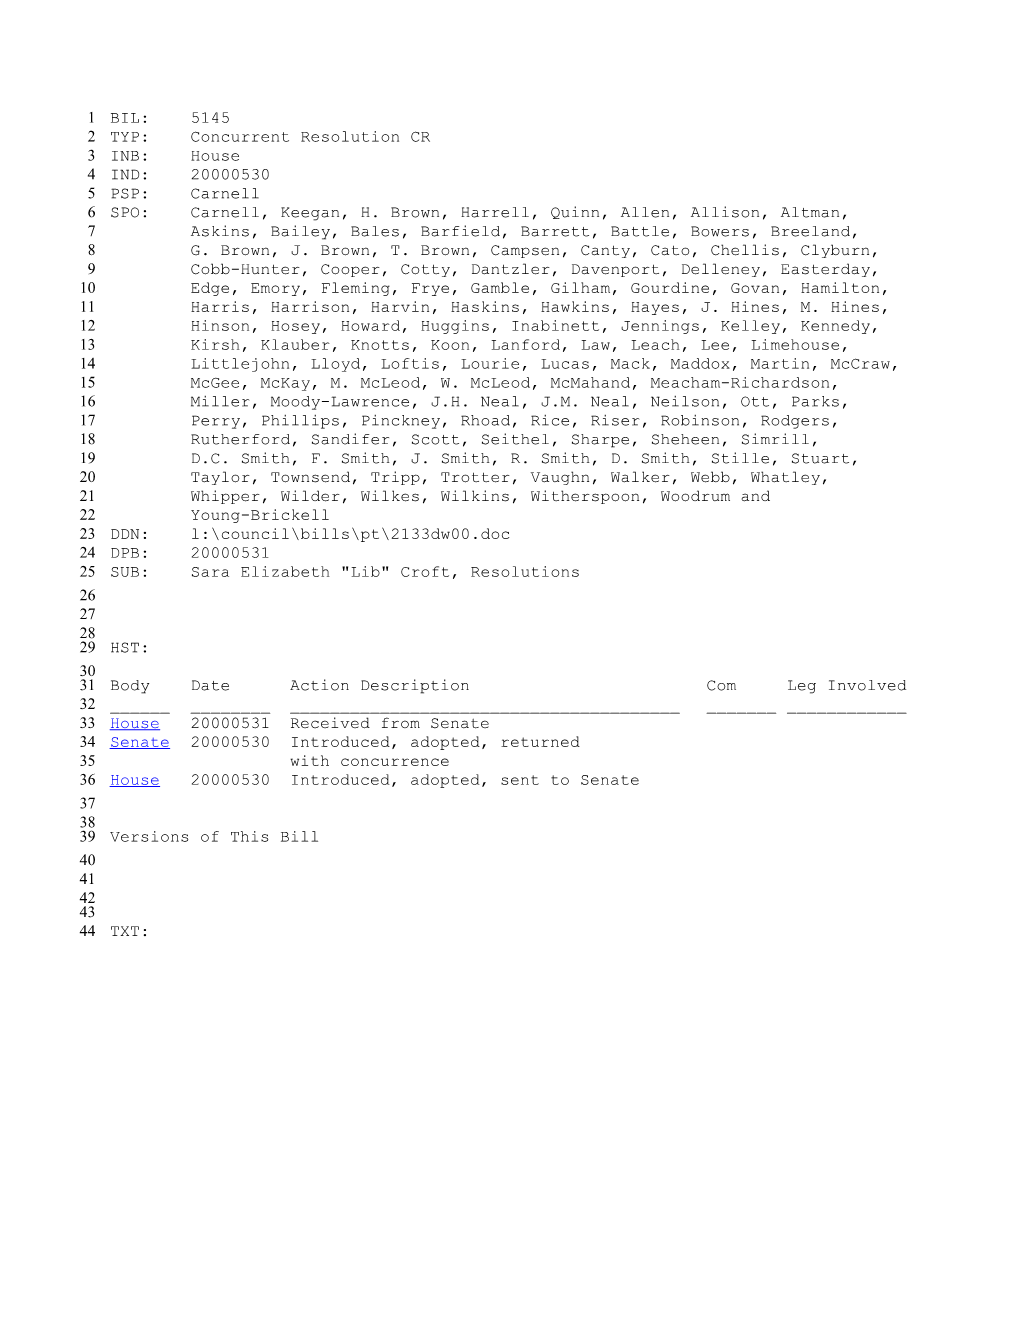 1999-2000 Bill 5145: Sara Elizabeth Lib Croft, Resolutions - South Carolina Legislature Online